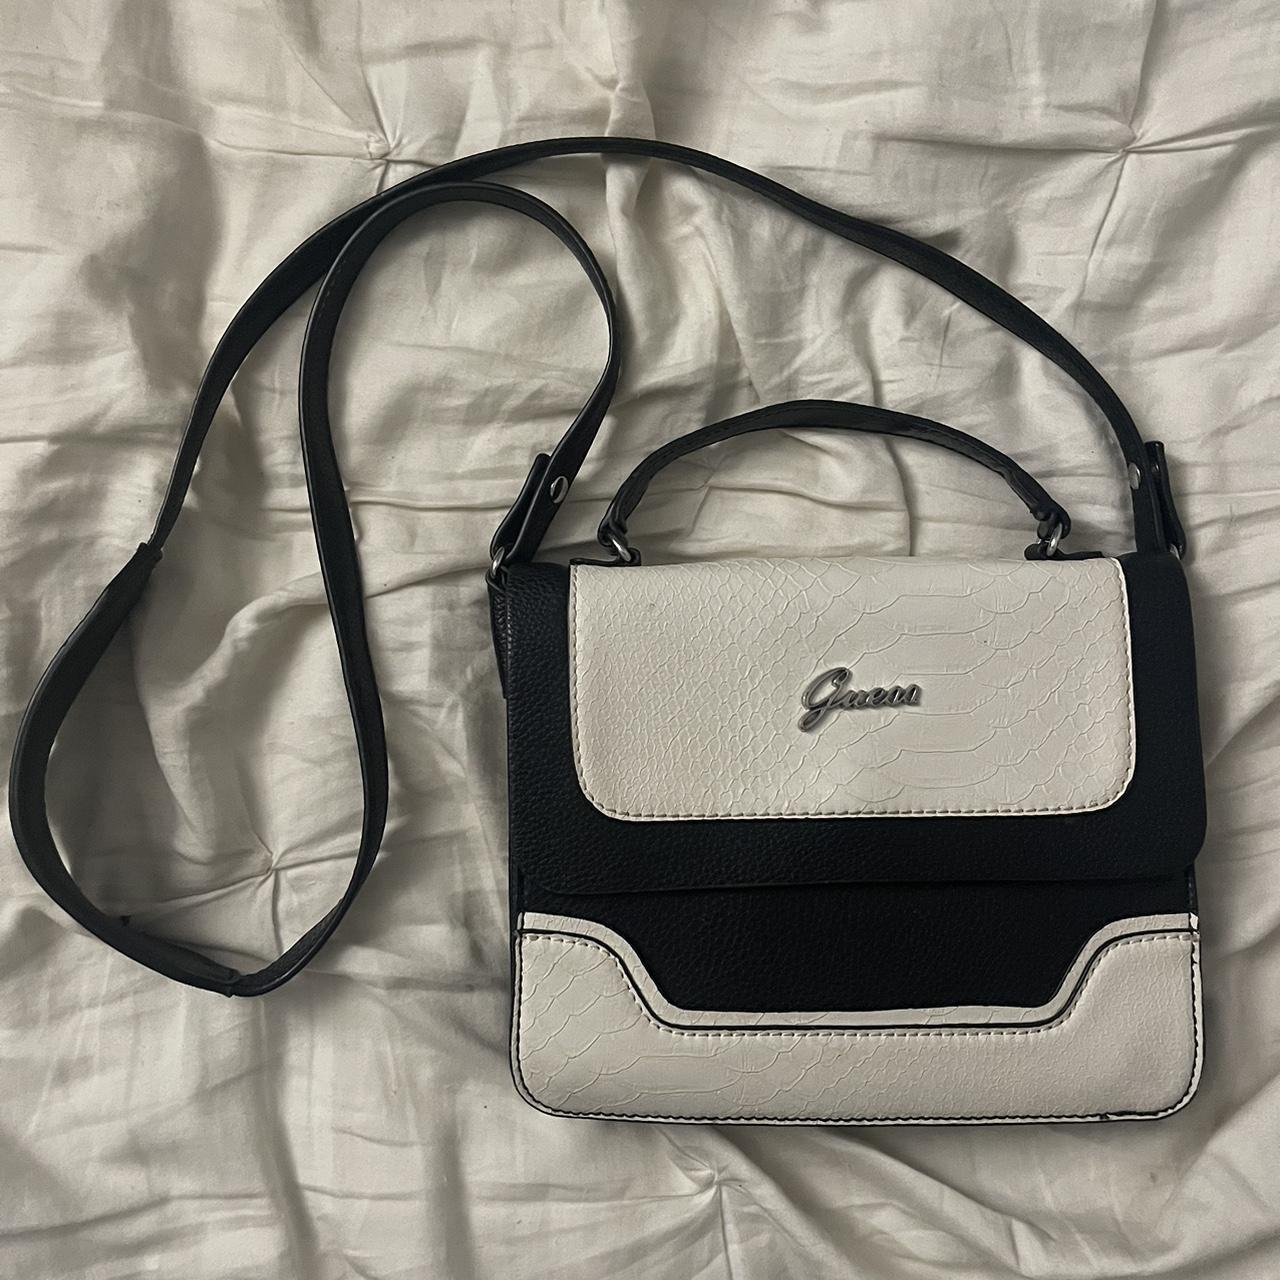 GUESS Noella Saffiano Faux Leather Handbag, Black